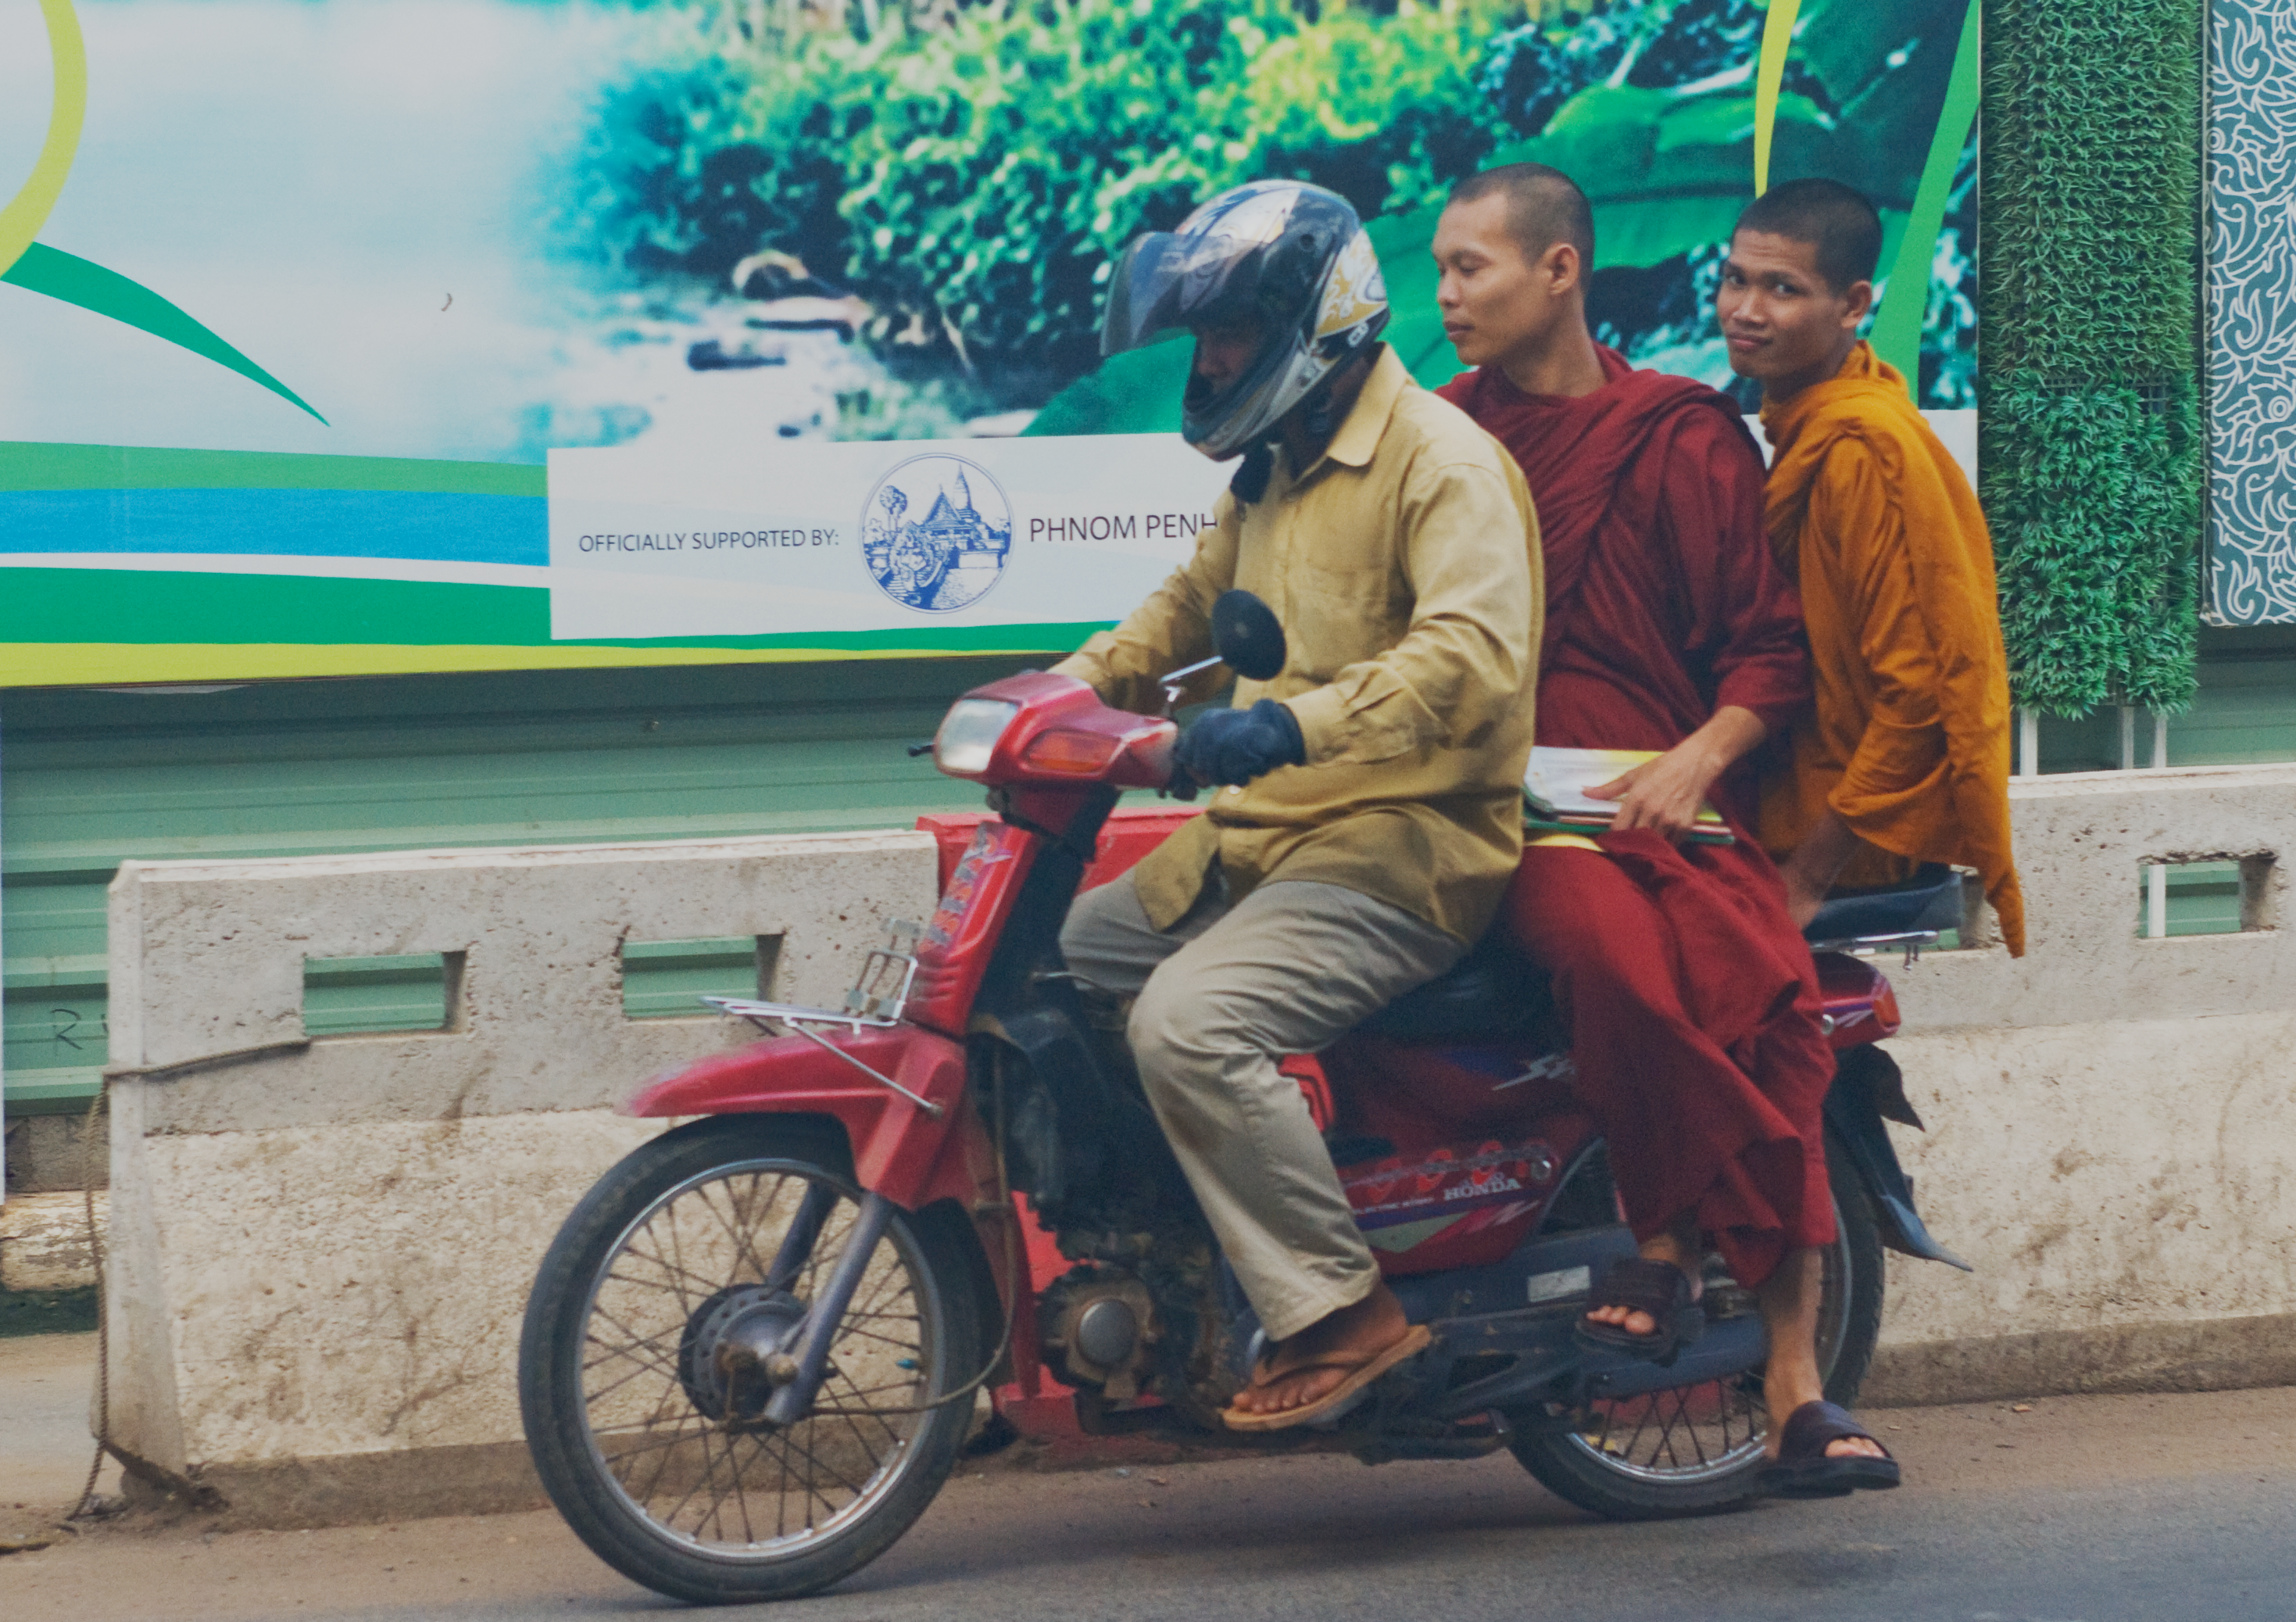 Monks on Motorcycles, Phnom Penh, Cambodia